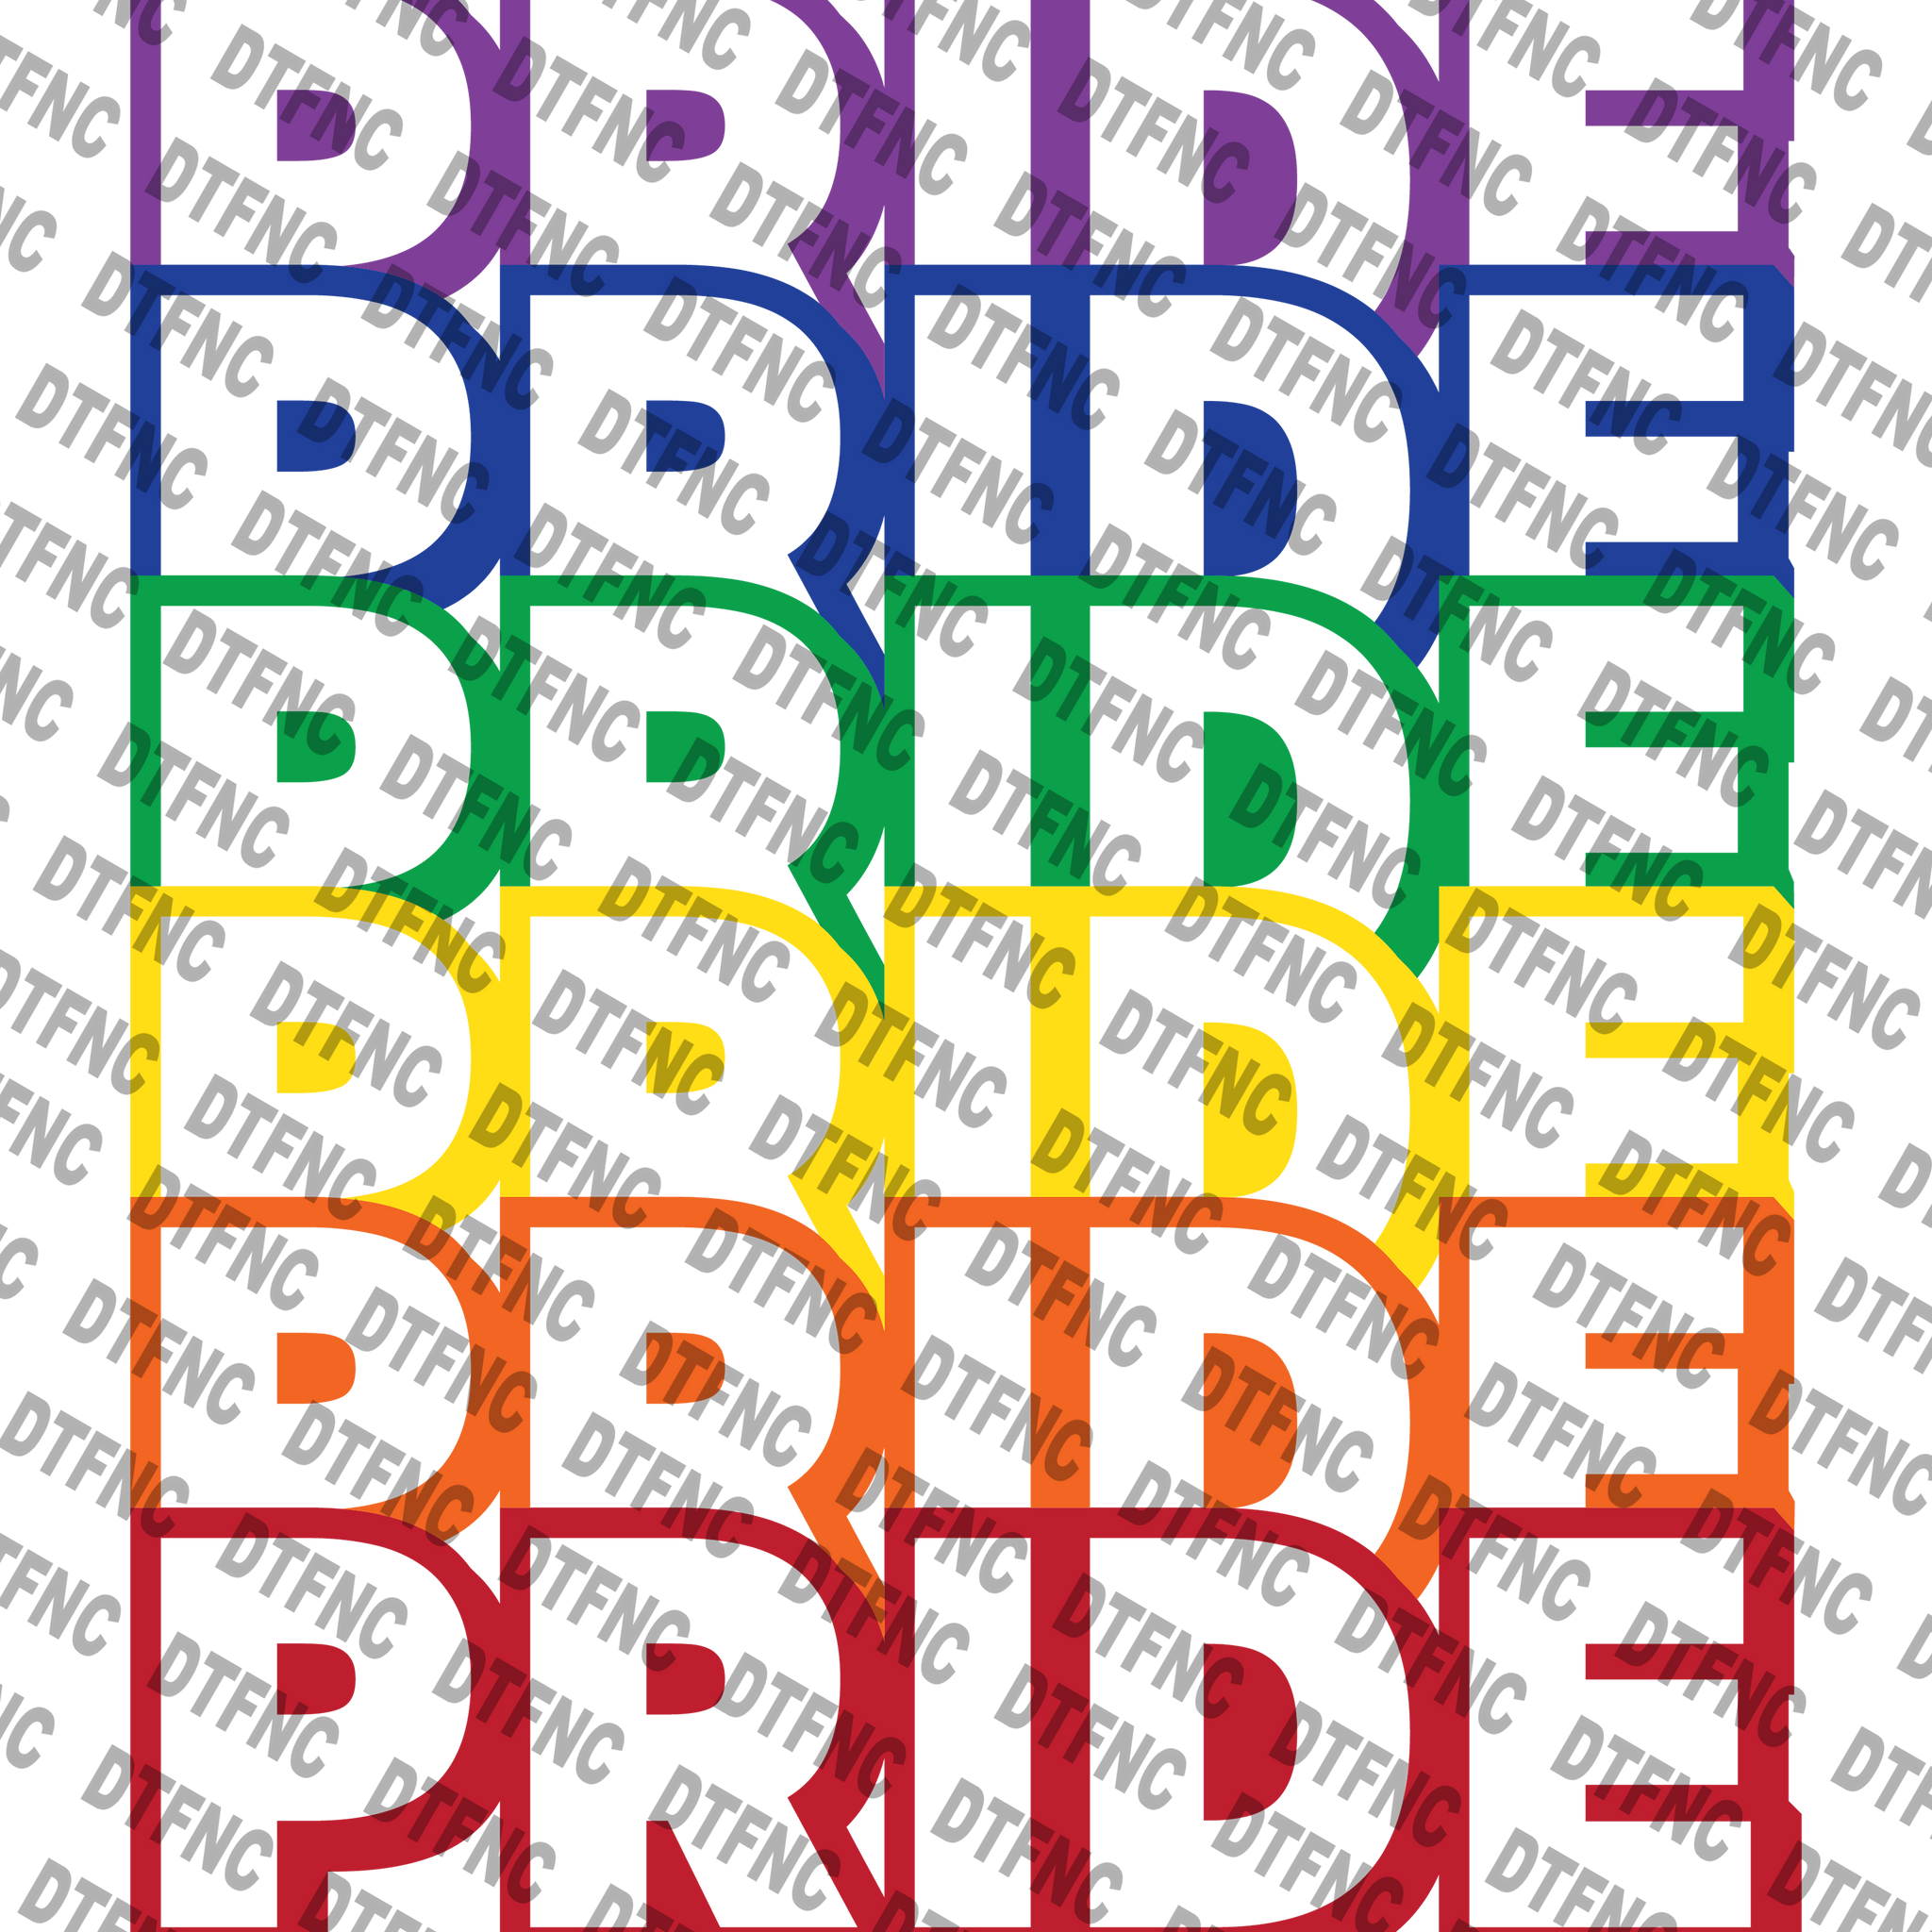 LGBTQ - Pride Pride Pride